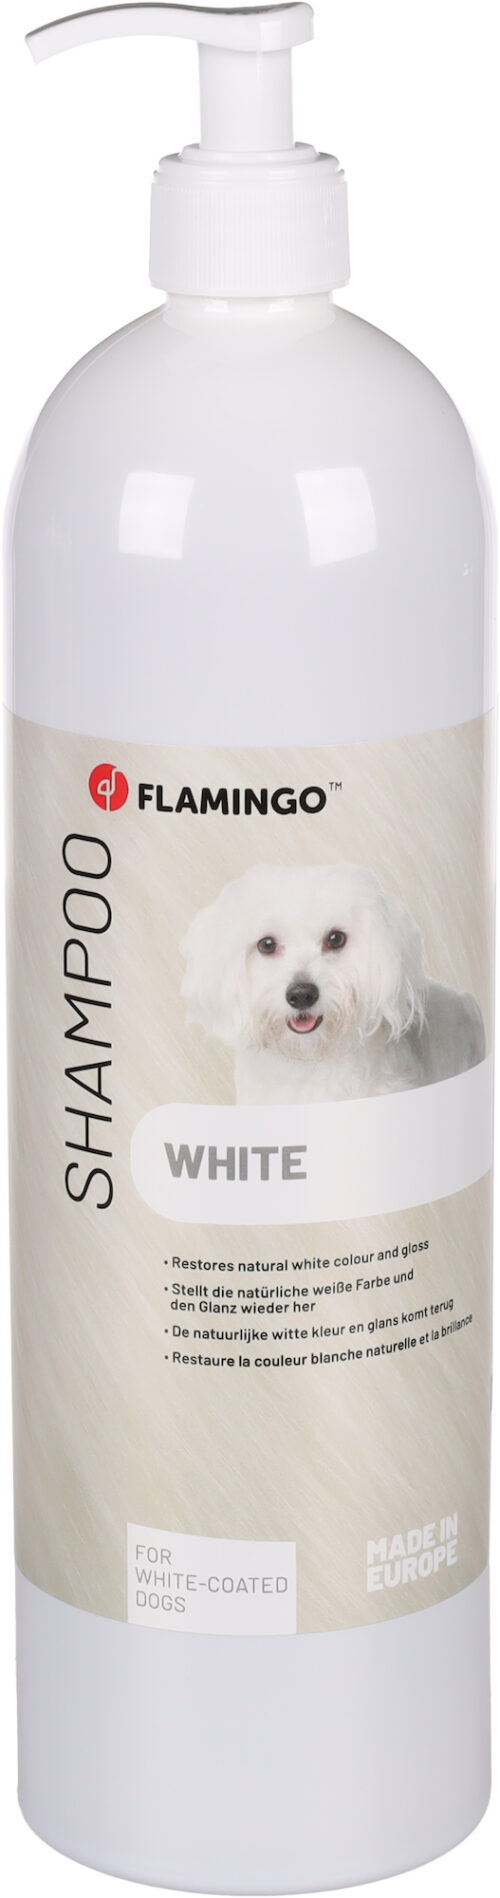 Flamingo šampon za belo dlako 1000ml